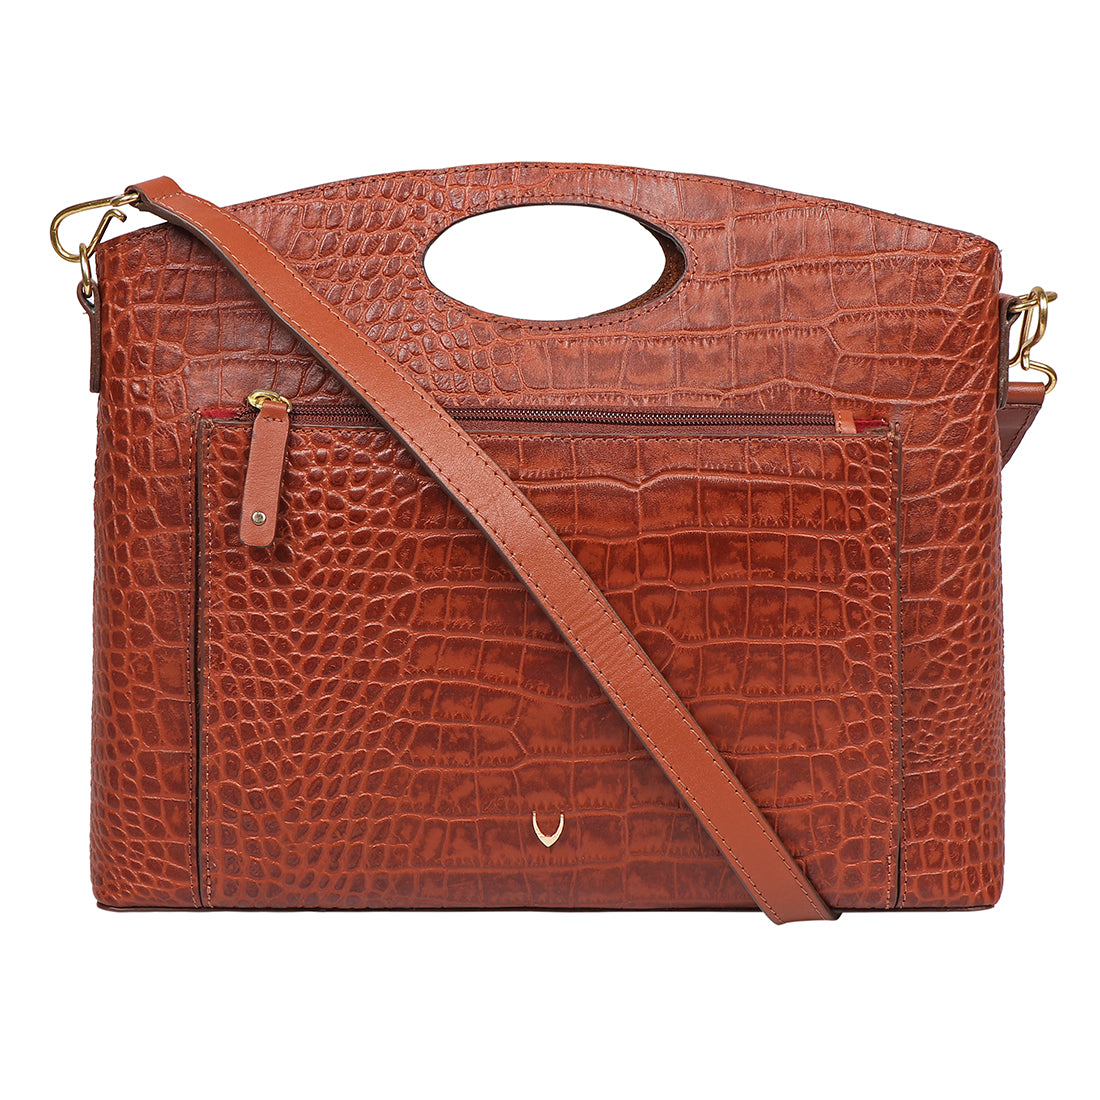 Buy Tan Arica 06 Sling Bag Online - Hidesign